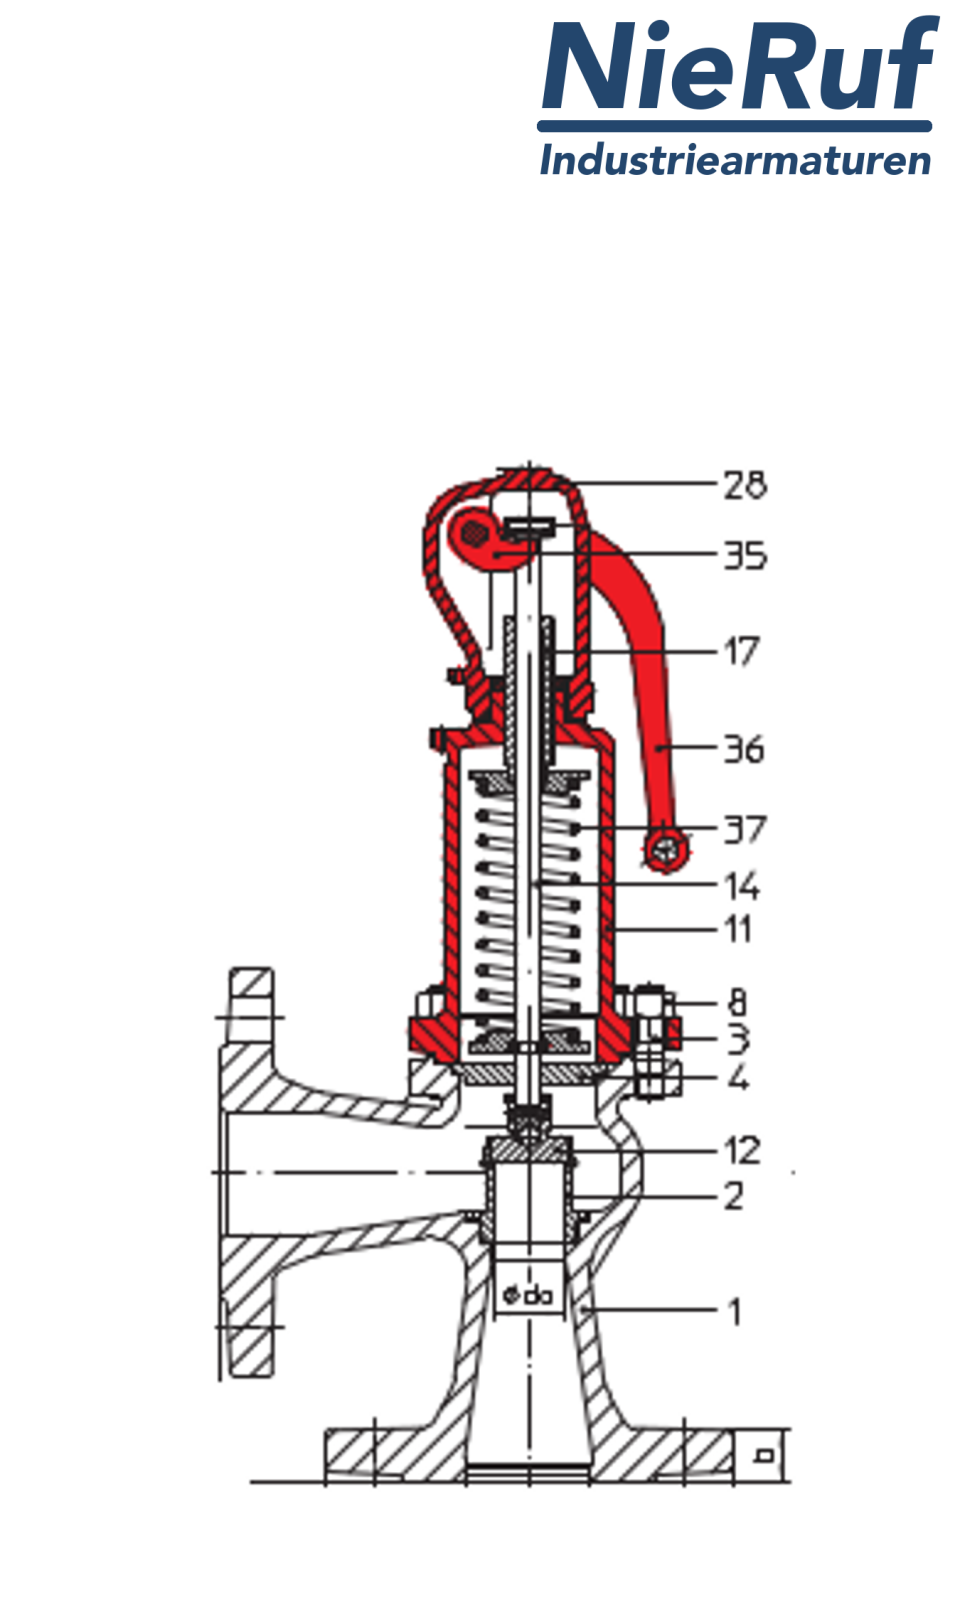 flange-safety valve DN15/DN15 SF01, cast iron EN-JL1040 FPM, with lever